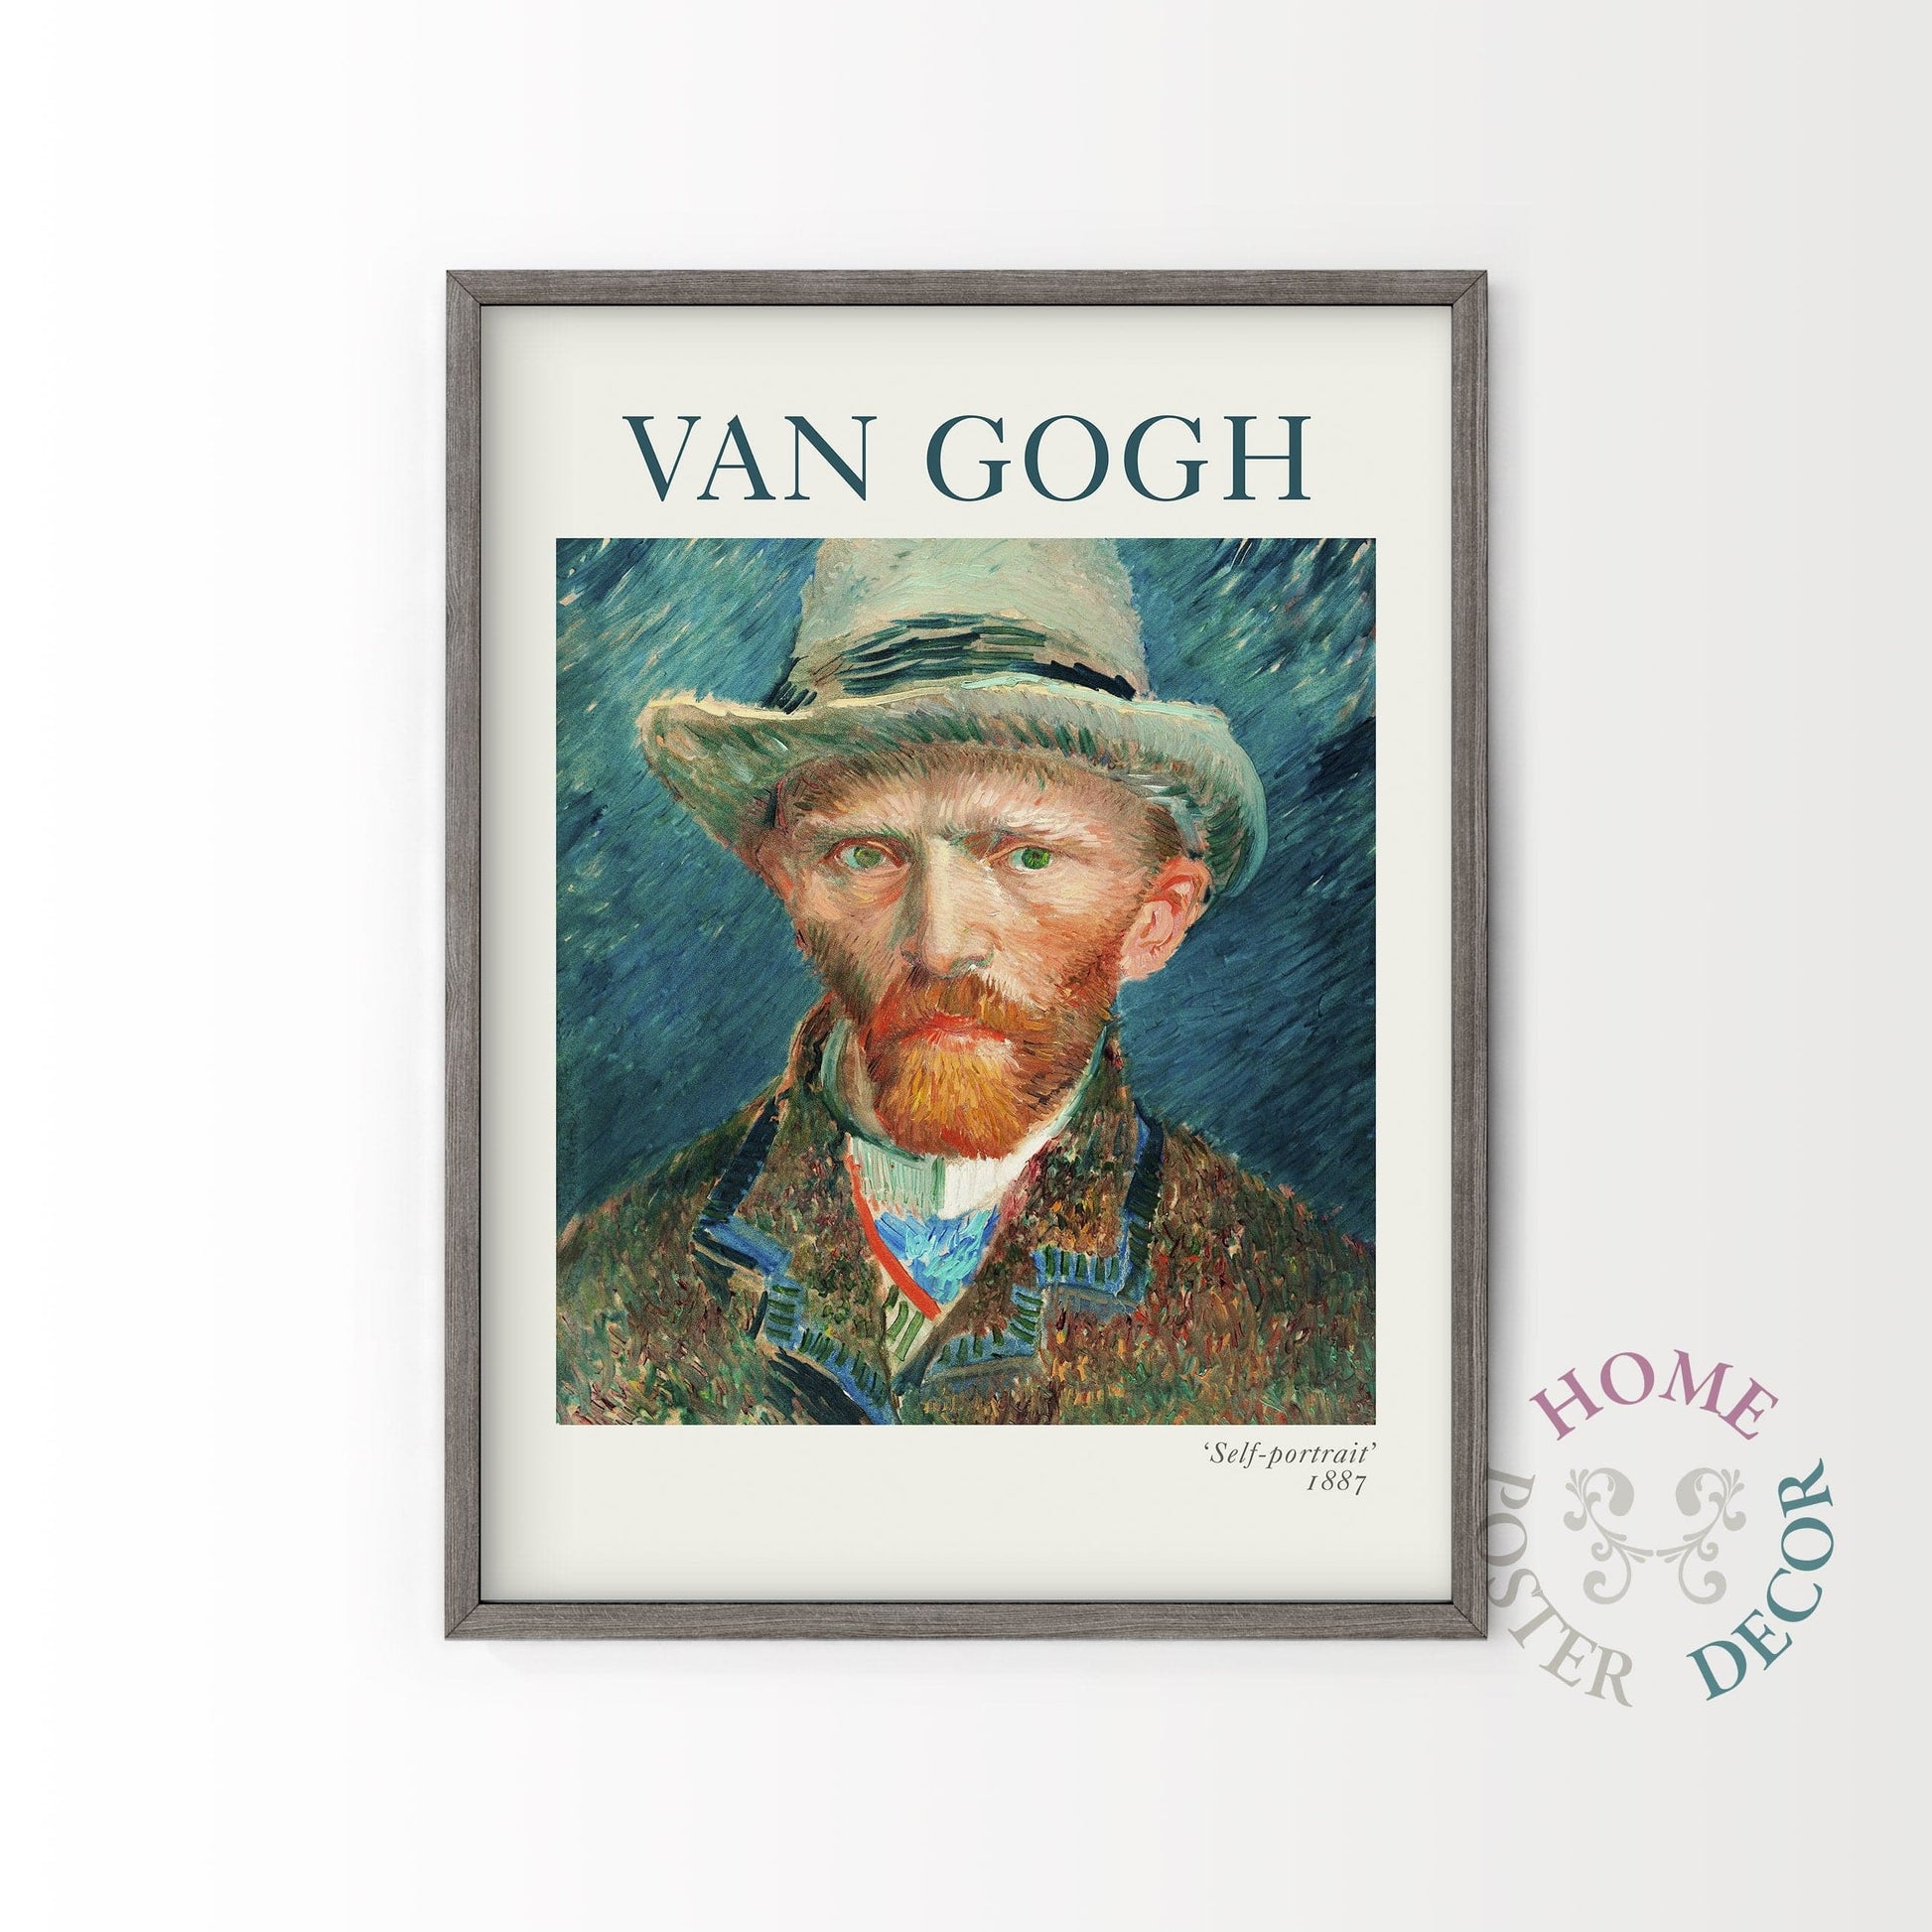 Home Poster Decor Van Gogh Poster, Self Portrait Wall Art, Van Gogh Print, Classic Painting, Post-impressionist Painter, Self-portrait (1887)